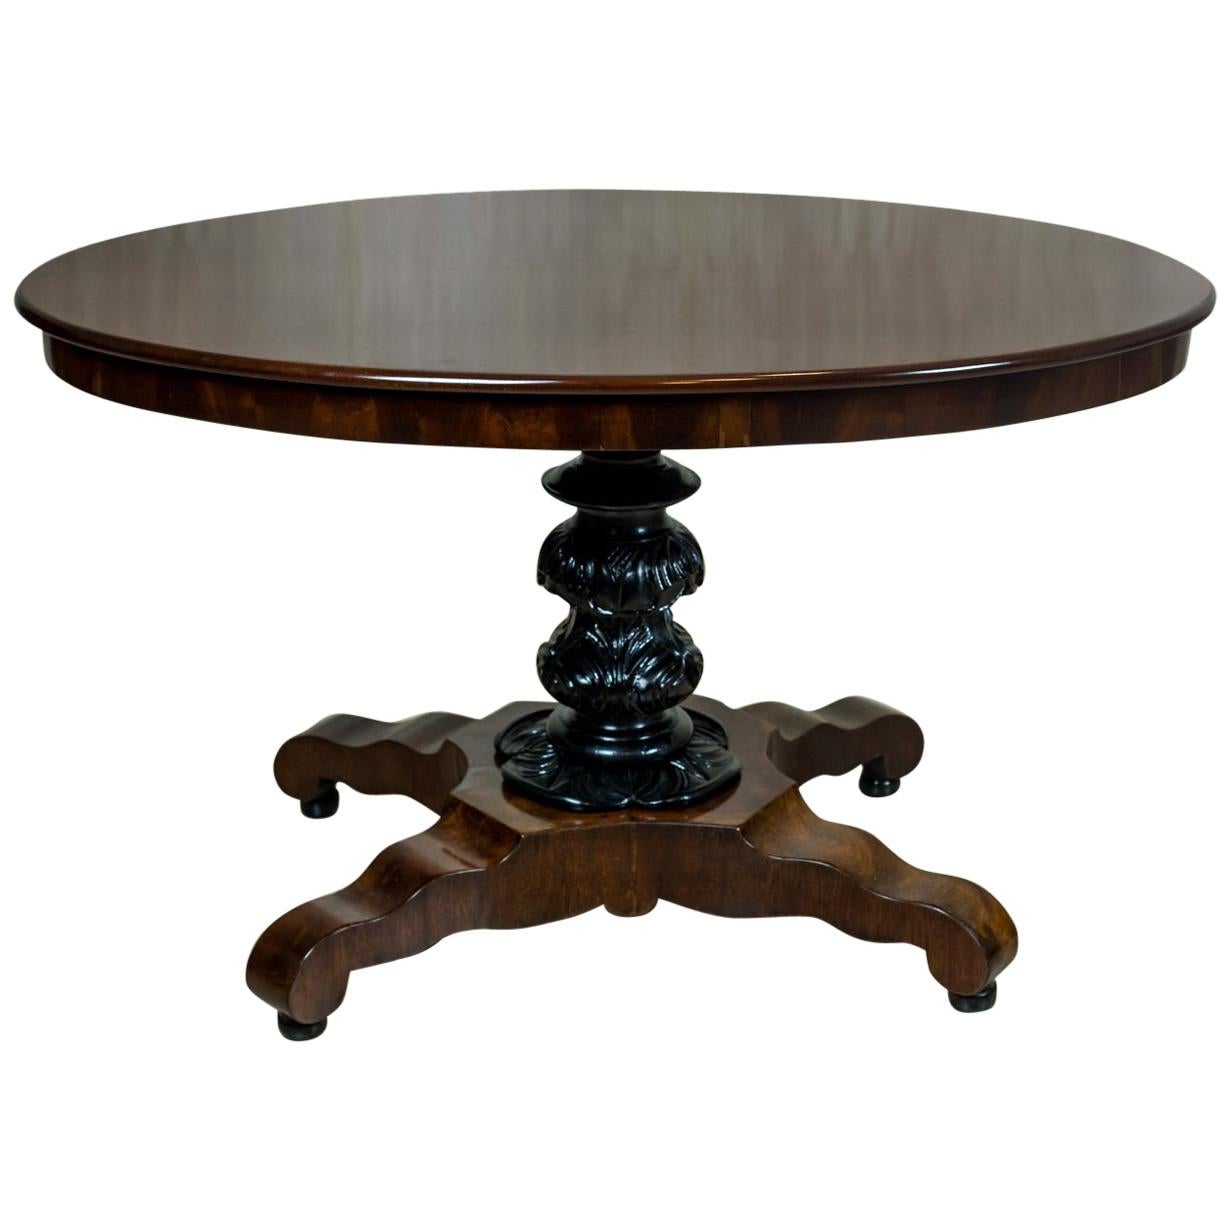 Ovaler Mahagoni-Tisch, um das 19. Jahrhundert